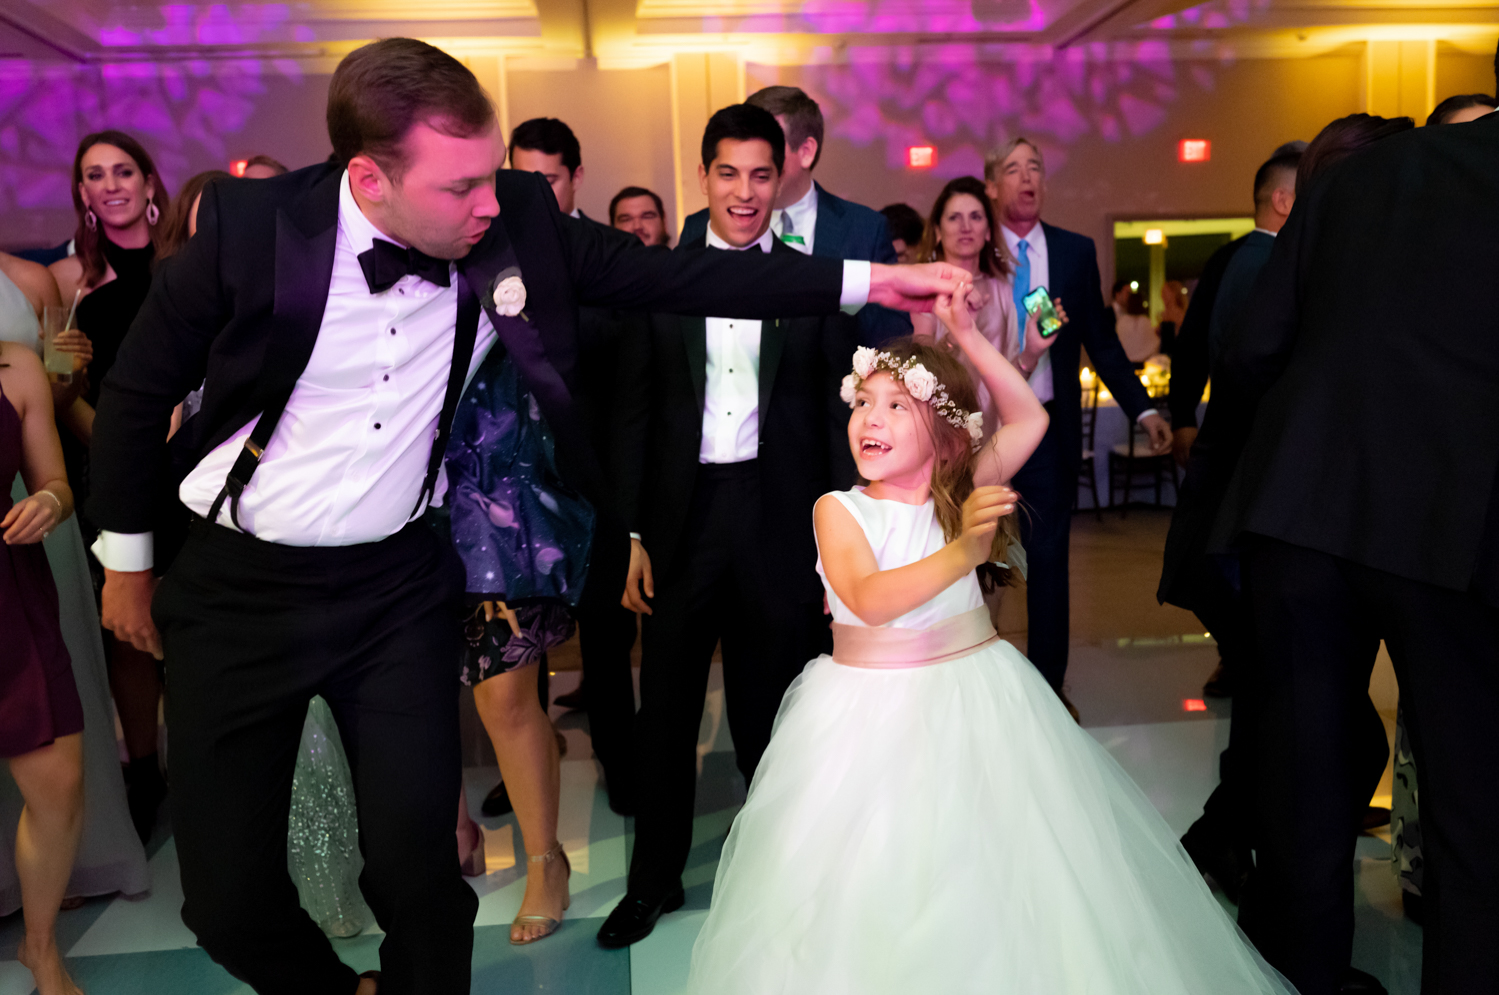 The groom spins the flower girl on the dance floor.